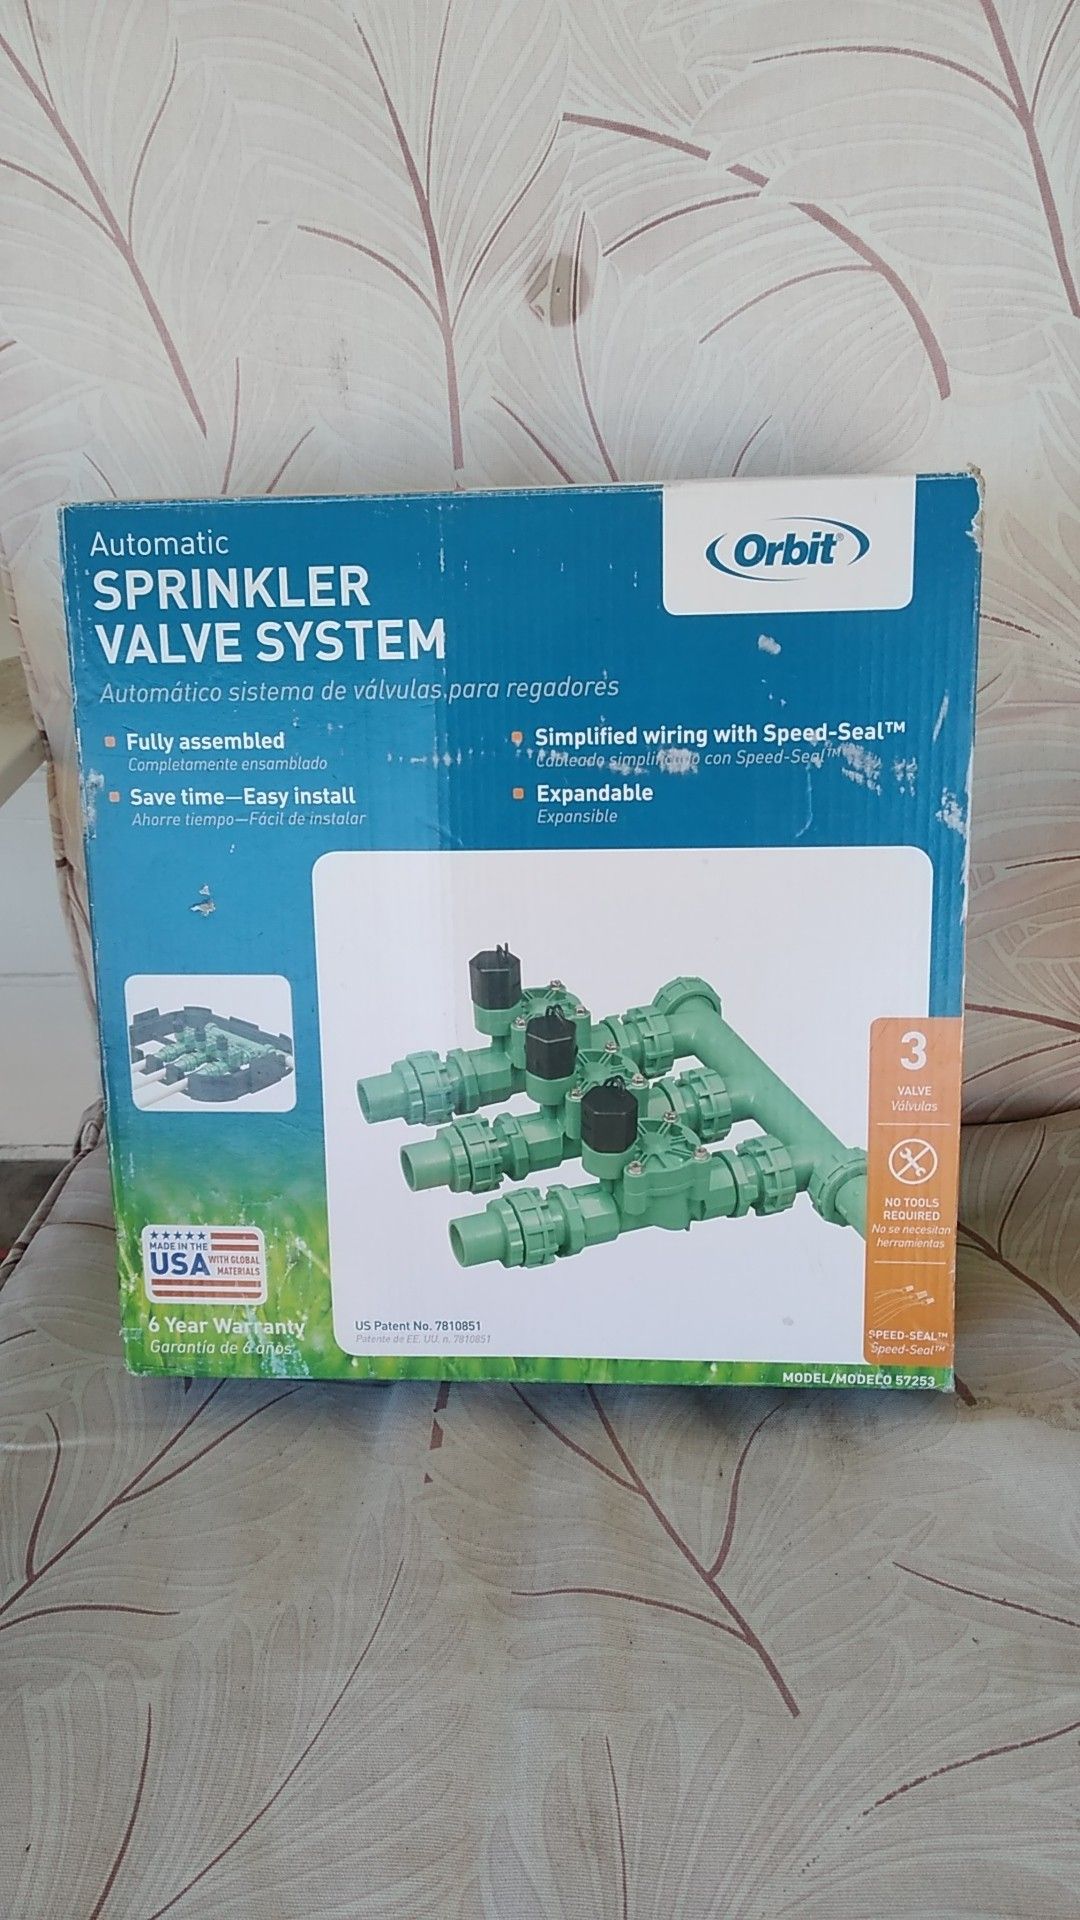 Sprinkler valve system